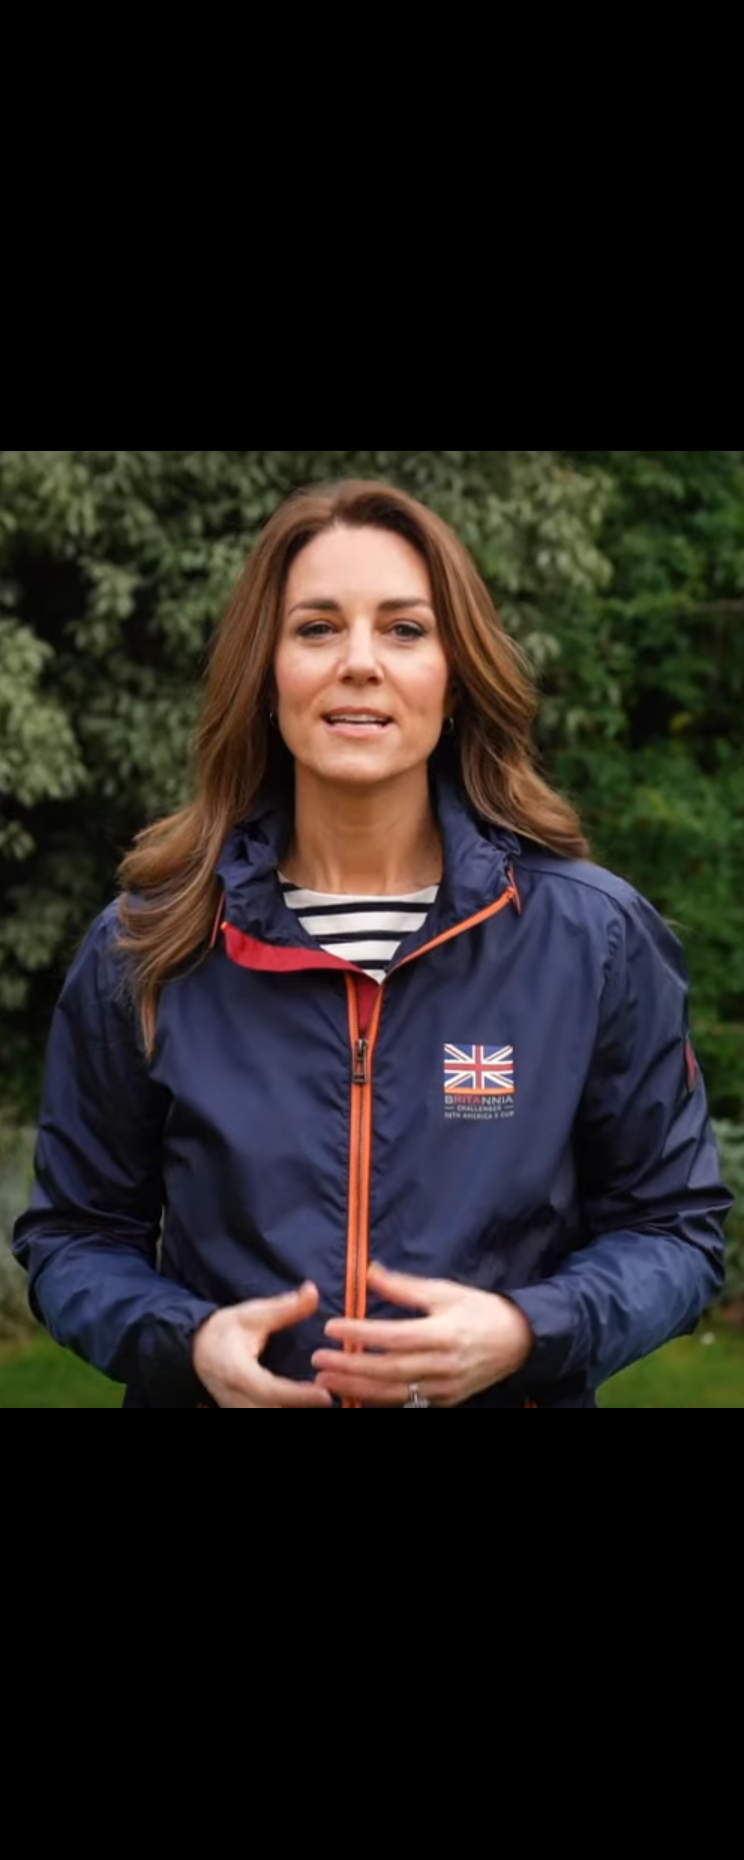 Belstaff America's Cup Britannia Windbreaker Jacket as seen on Kate Middleton, The Duchess of Cambridge.